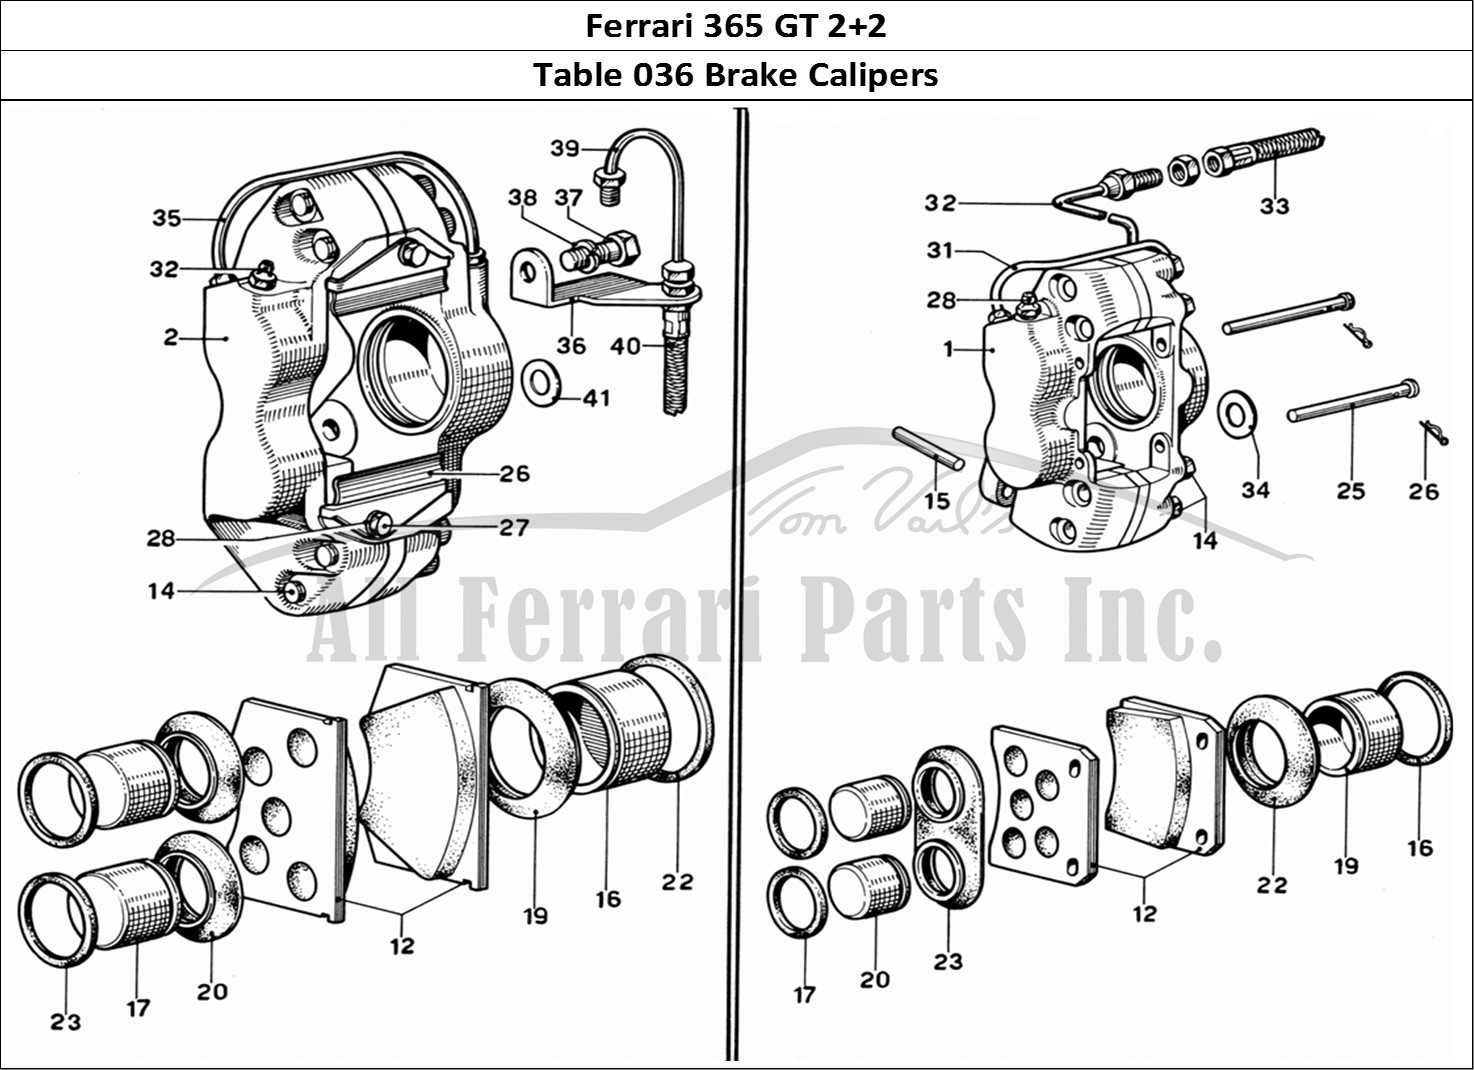 Ferrari Parts Ferrari 365 GT 2+2 (Mechanical) Page 036 Front and Rear Brakes Cal